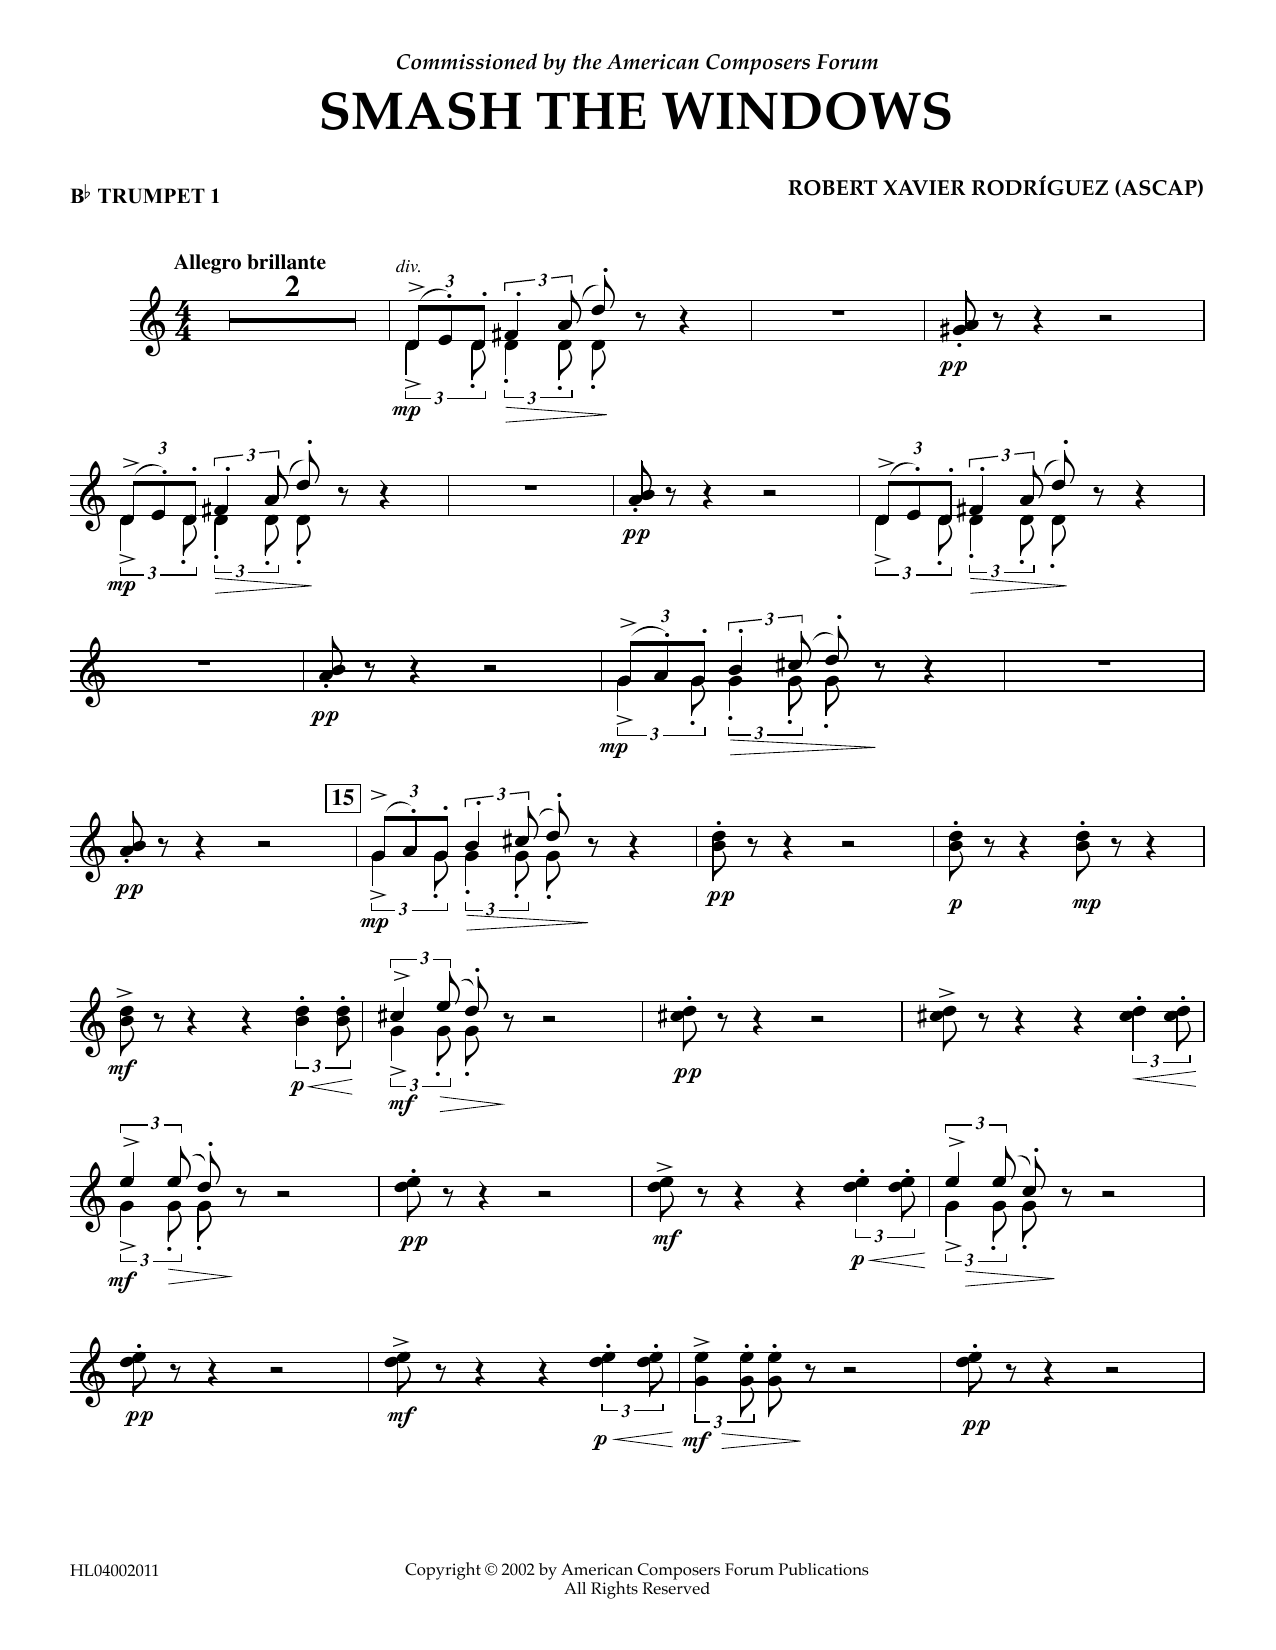 Robert Xavier Rodríguez Smash the Windows - Bb Trumpet 1 Sheet Music Notes & Chords for Concert Band - Download or Print PDF